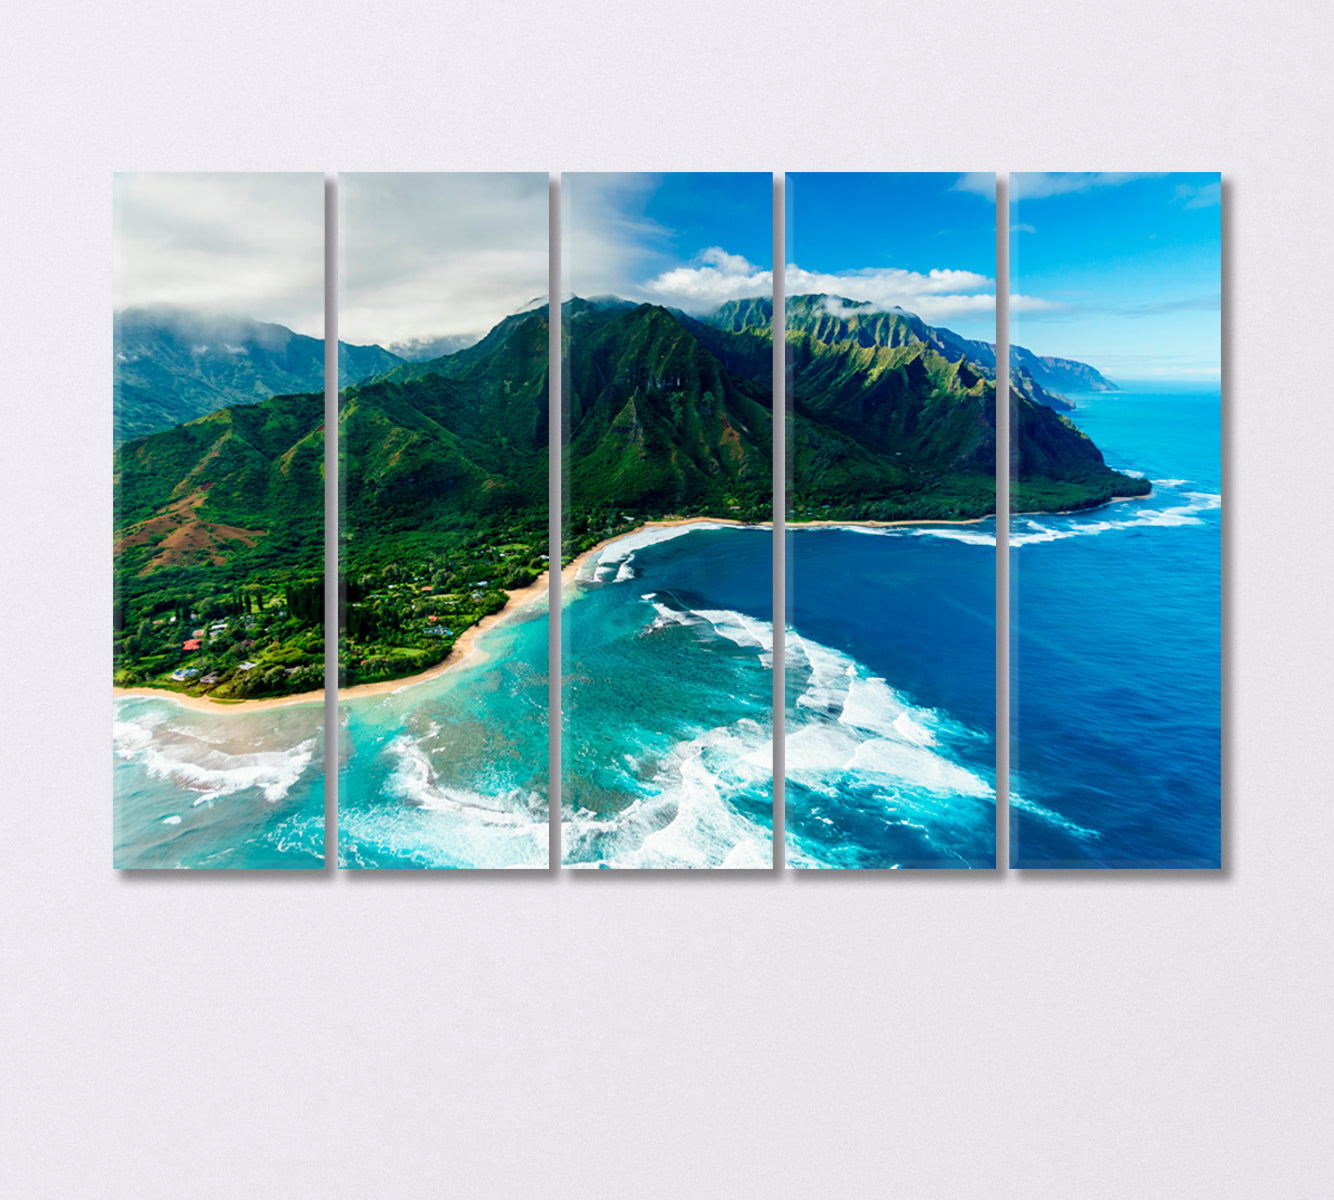 Napali Coast State Wilderness Park Hawaii Canvas Print-Canvas Print-CetArt-5 Panels-36x24 inches-CetArt